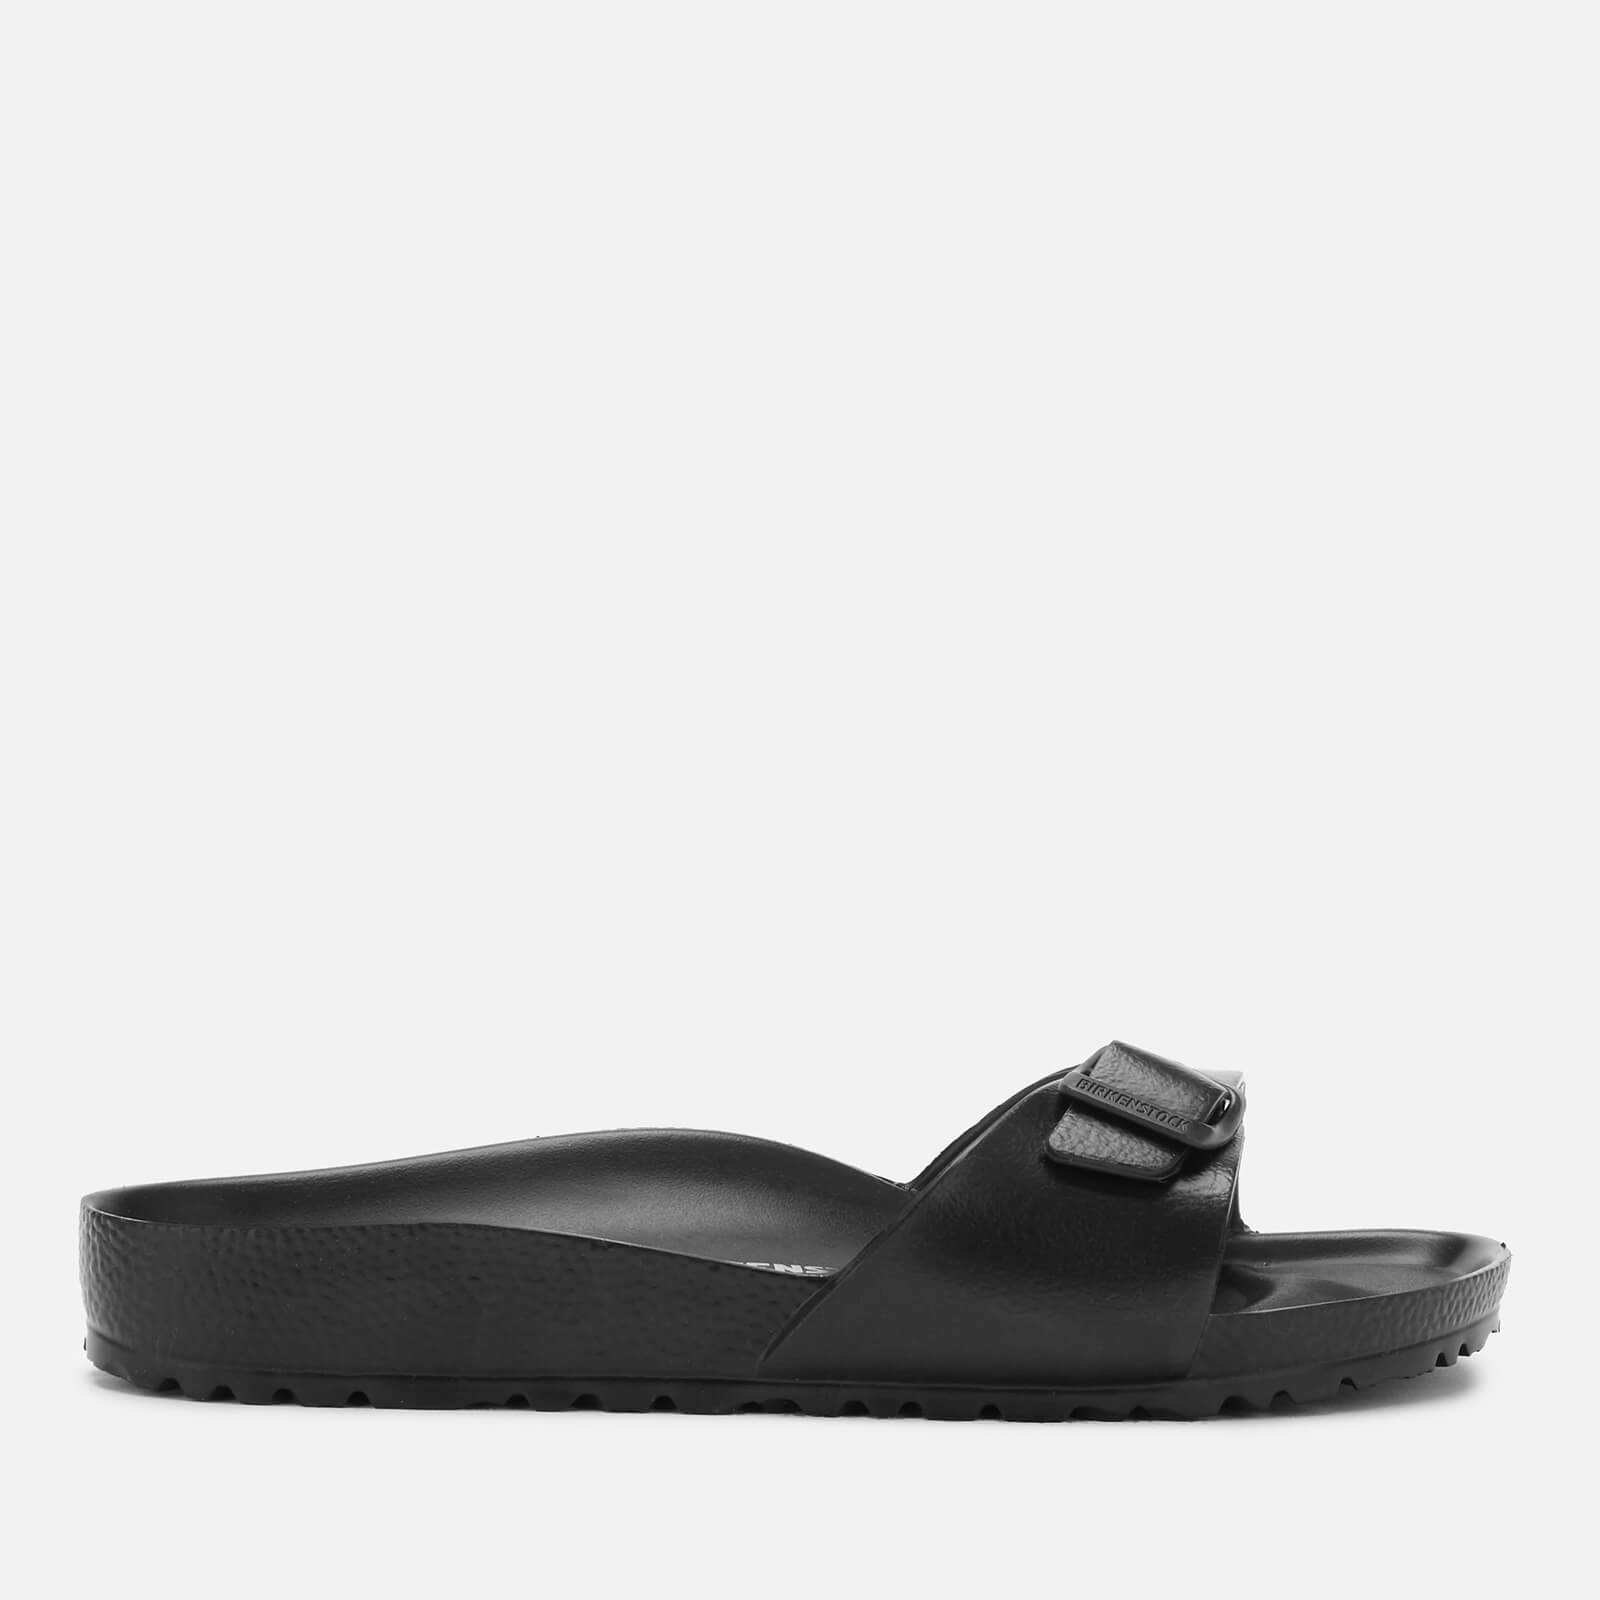 Birkenstock Women's Madrid Slim Fit Eva Single Strap Sandals - Black - Eu 36/Uk 3.5